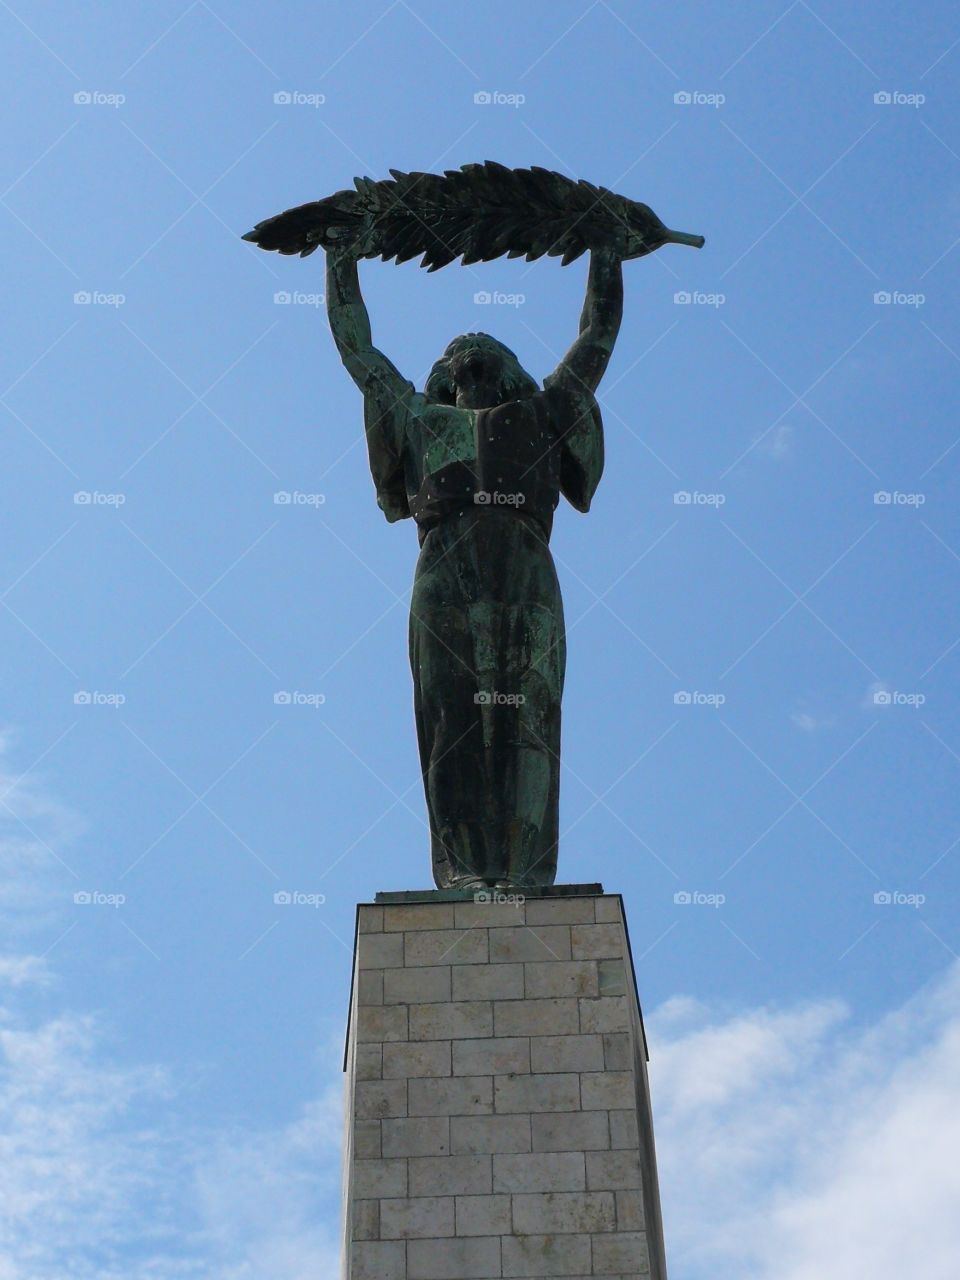 Budapest liberty monument